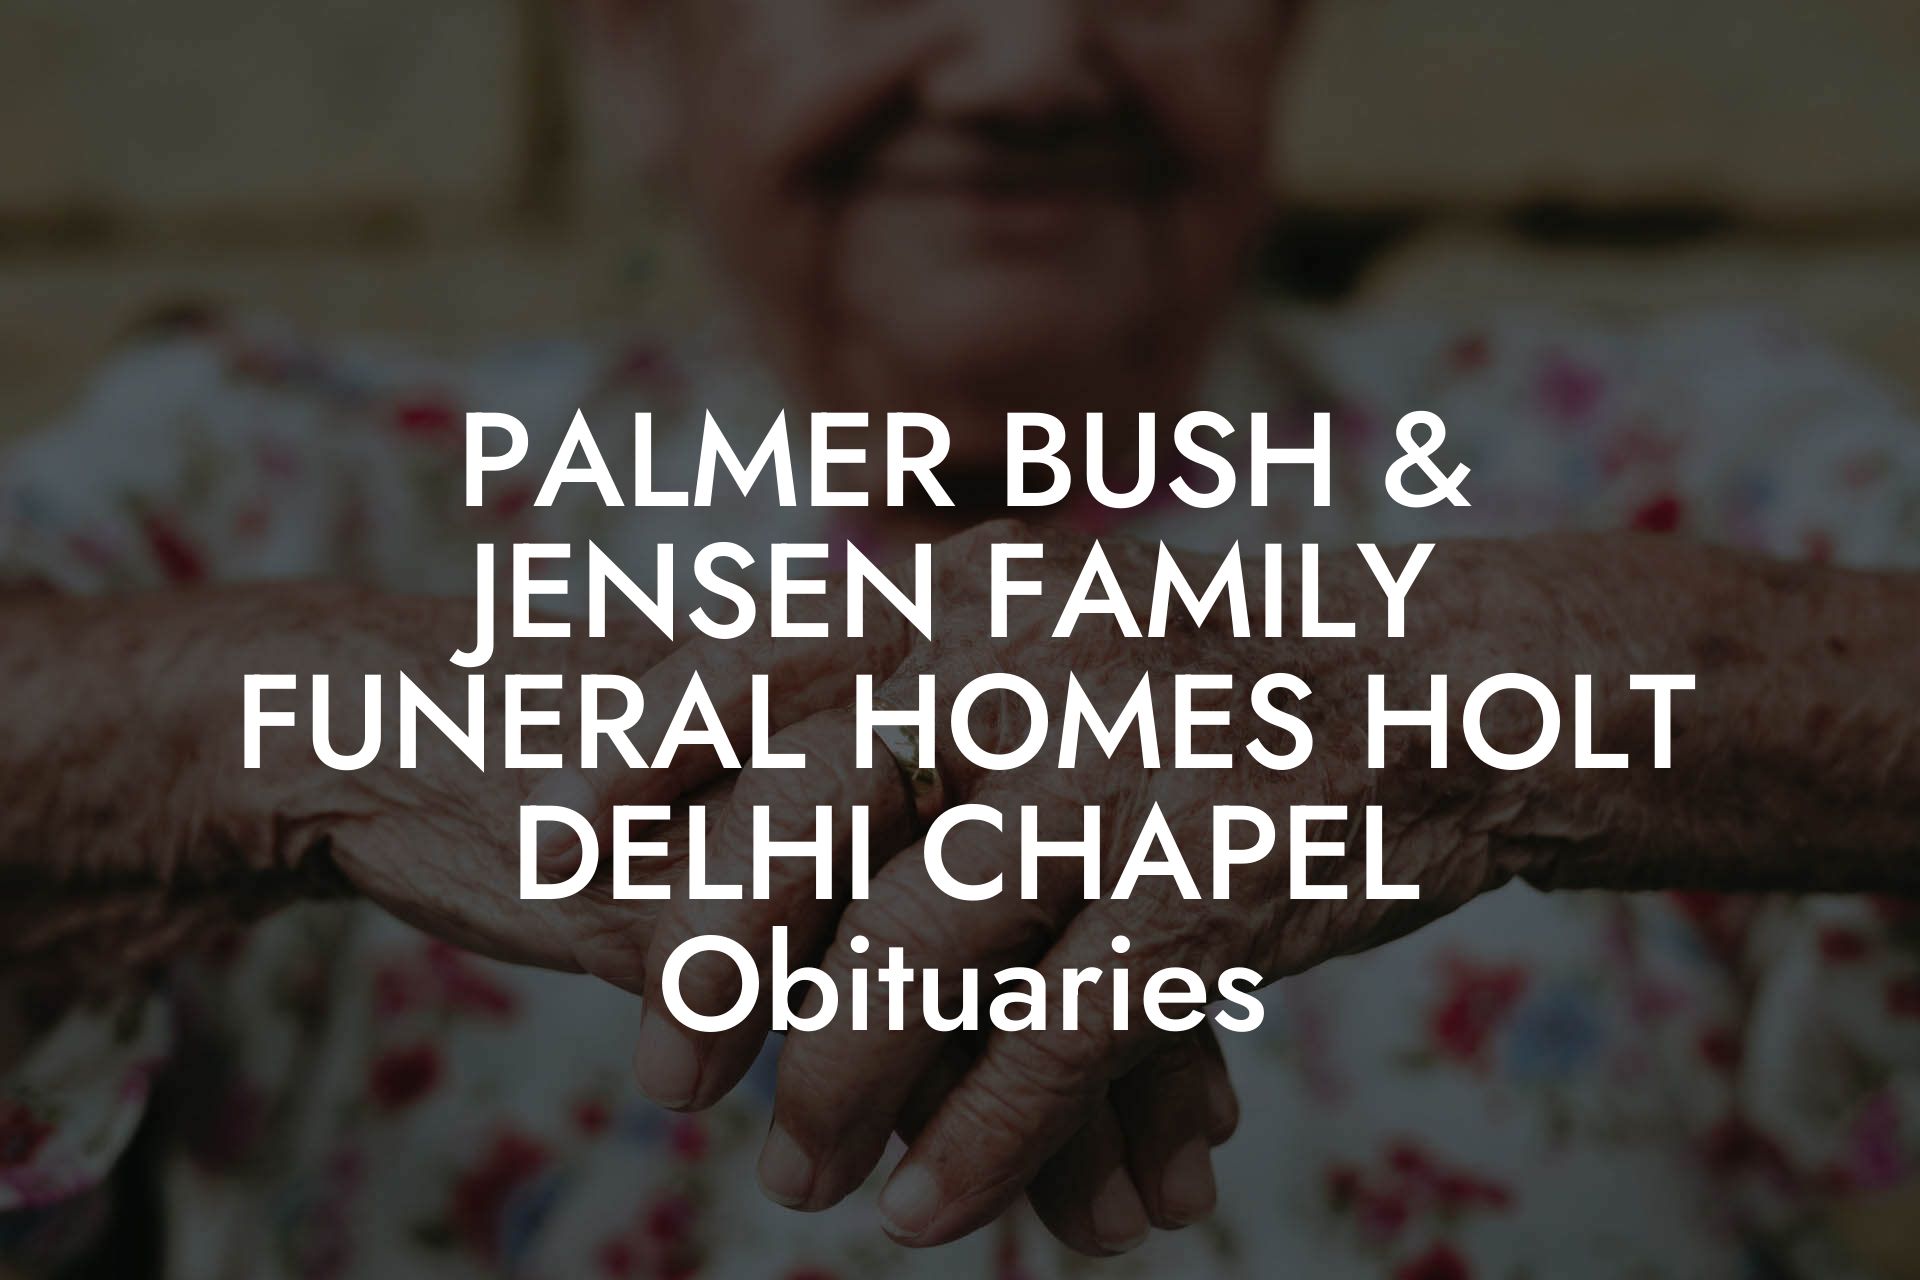 Palmer, Bush & Jensen Family Funeral Homes - Holt Delhi Chapel Obituaries